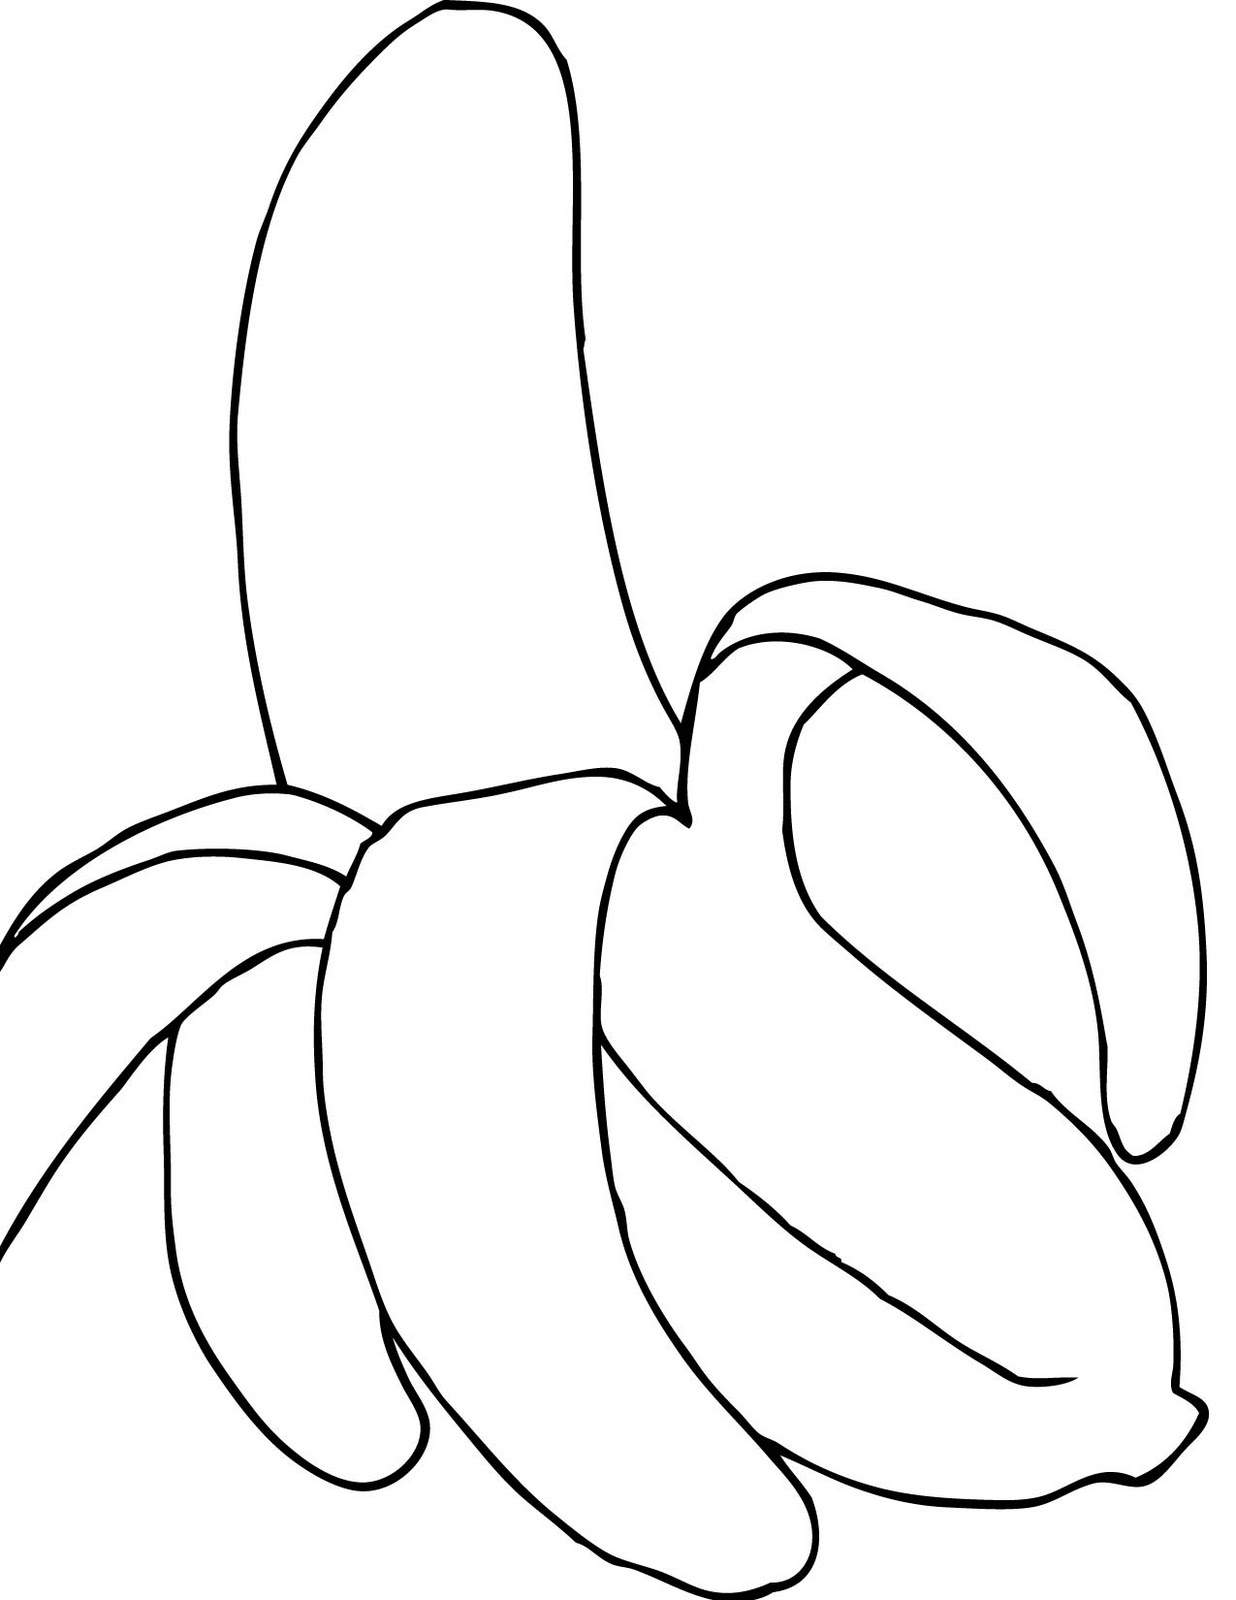 Download Beneficial fruit Banana 20 Banana coloring pages | Free Printables